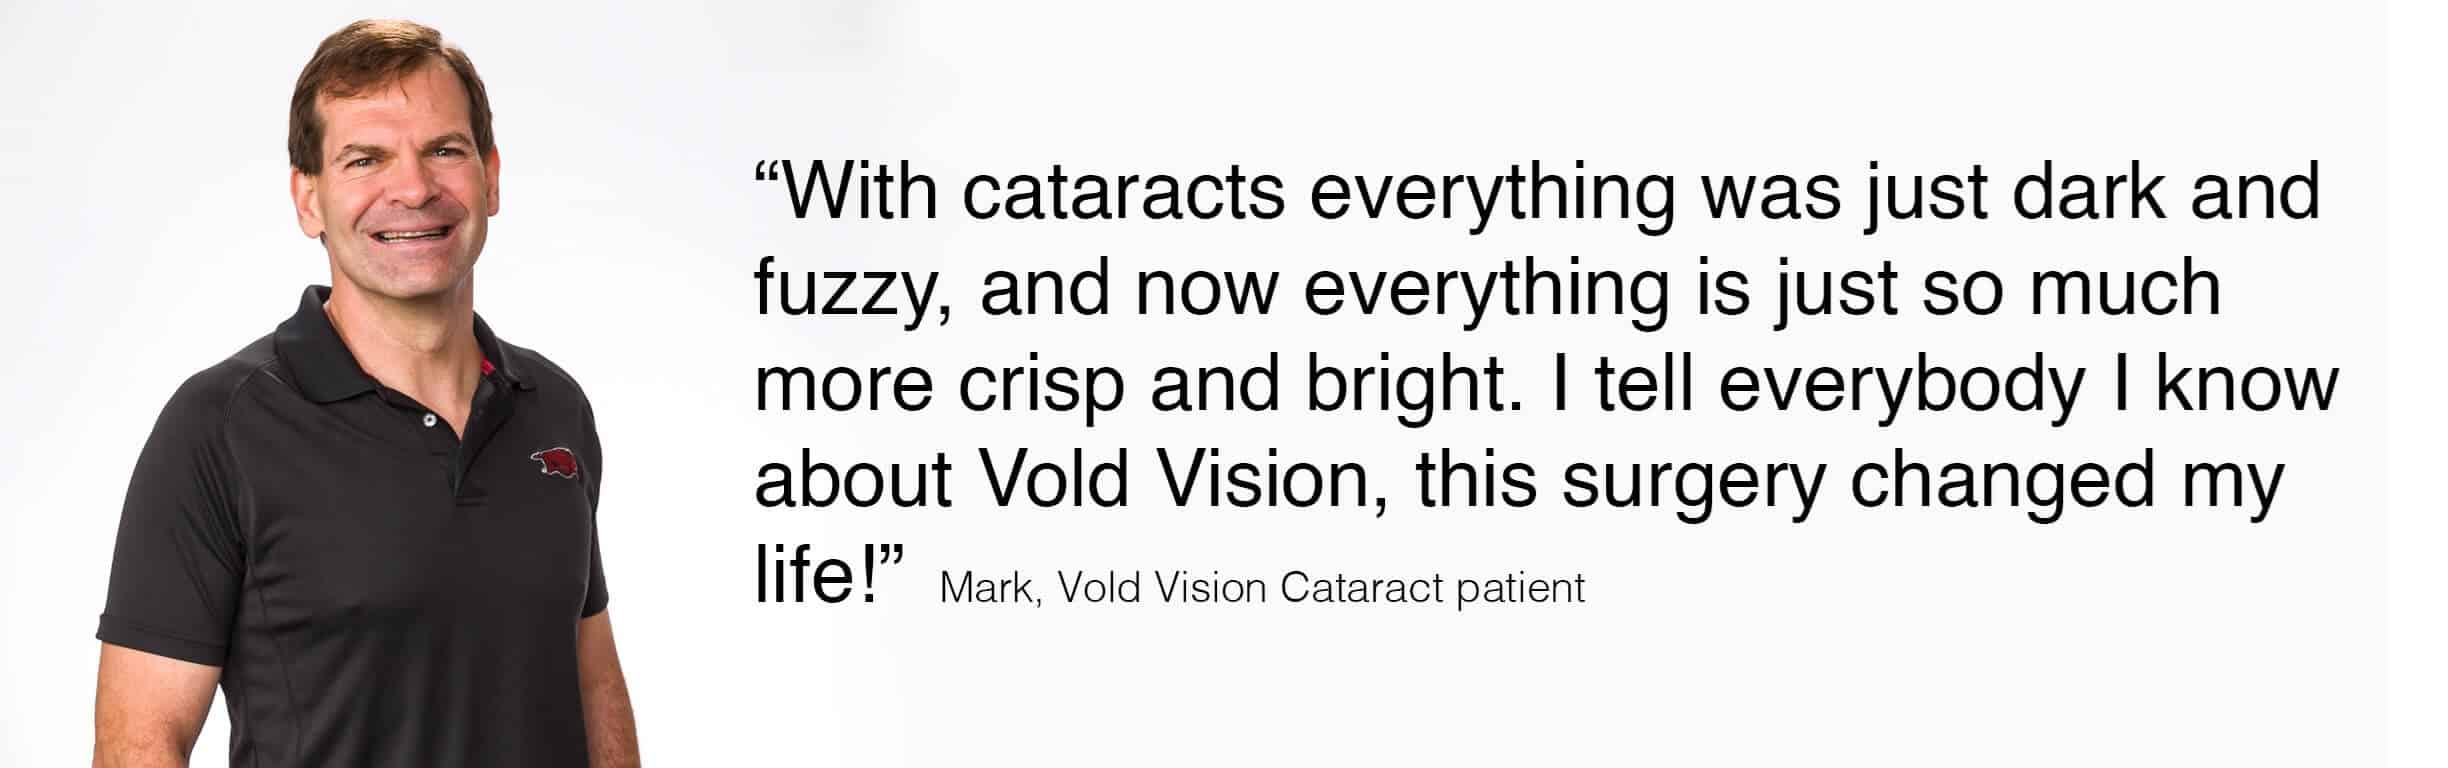 , Cataract, Vold Vision